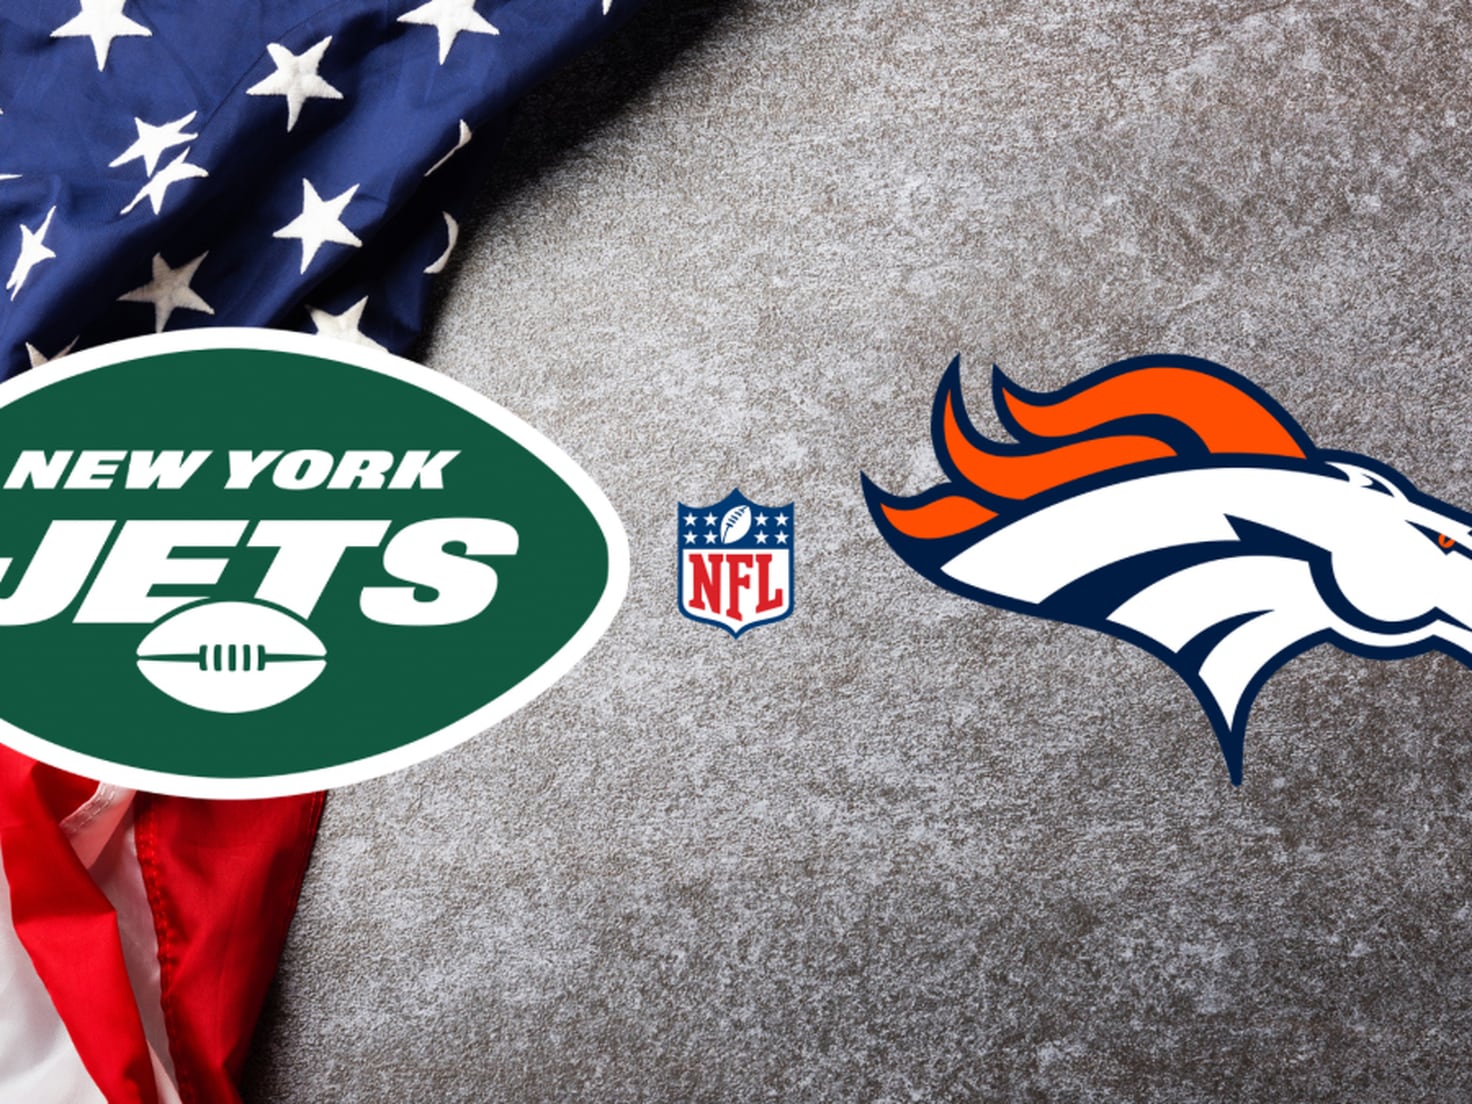 New York Jets vs Denver Broncos: times, how to watch on TV, stream